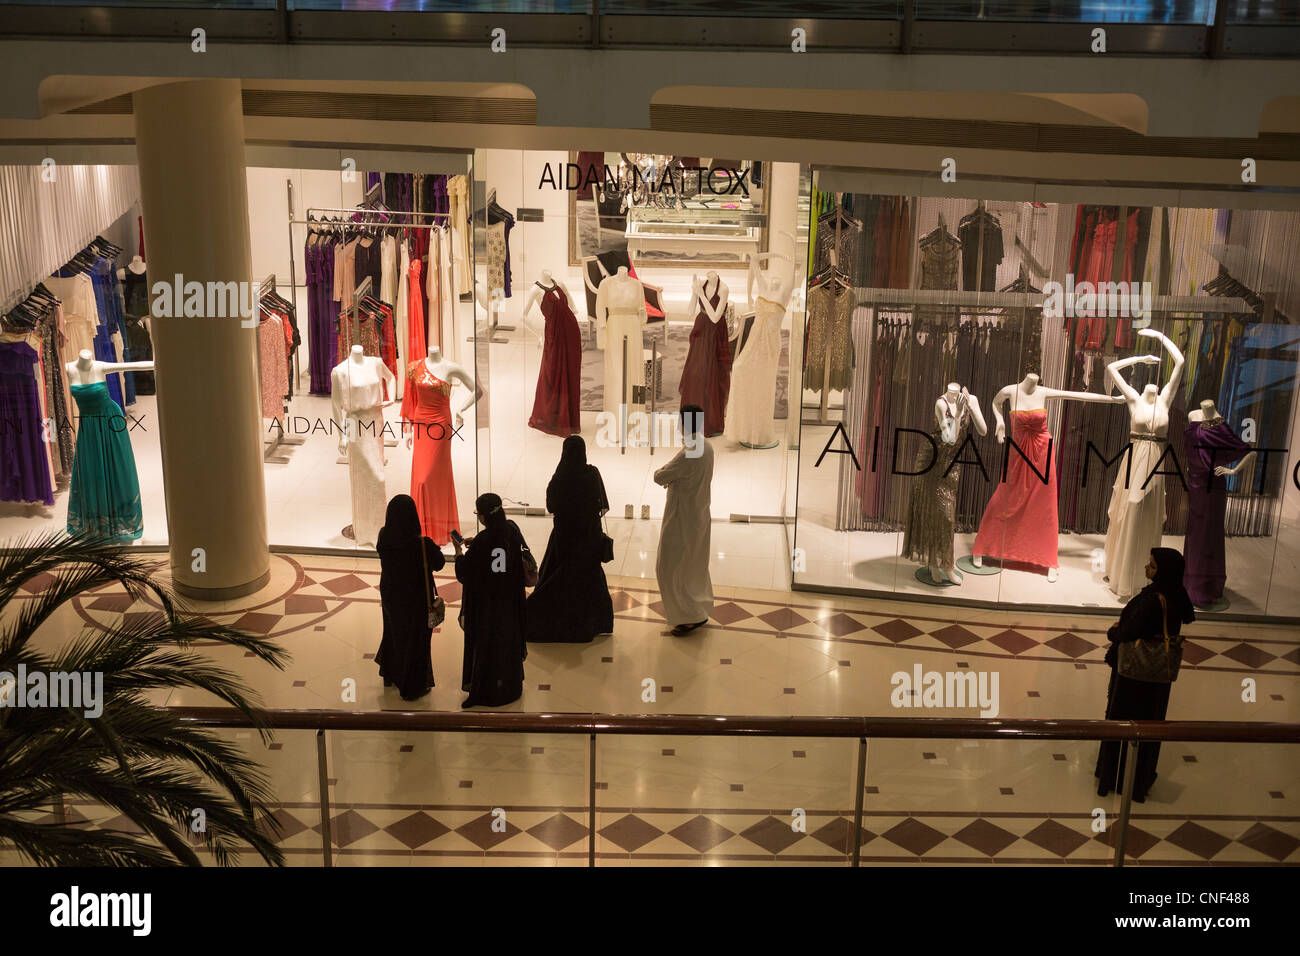 Shopgirls in Saudi Arabia